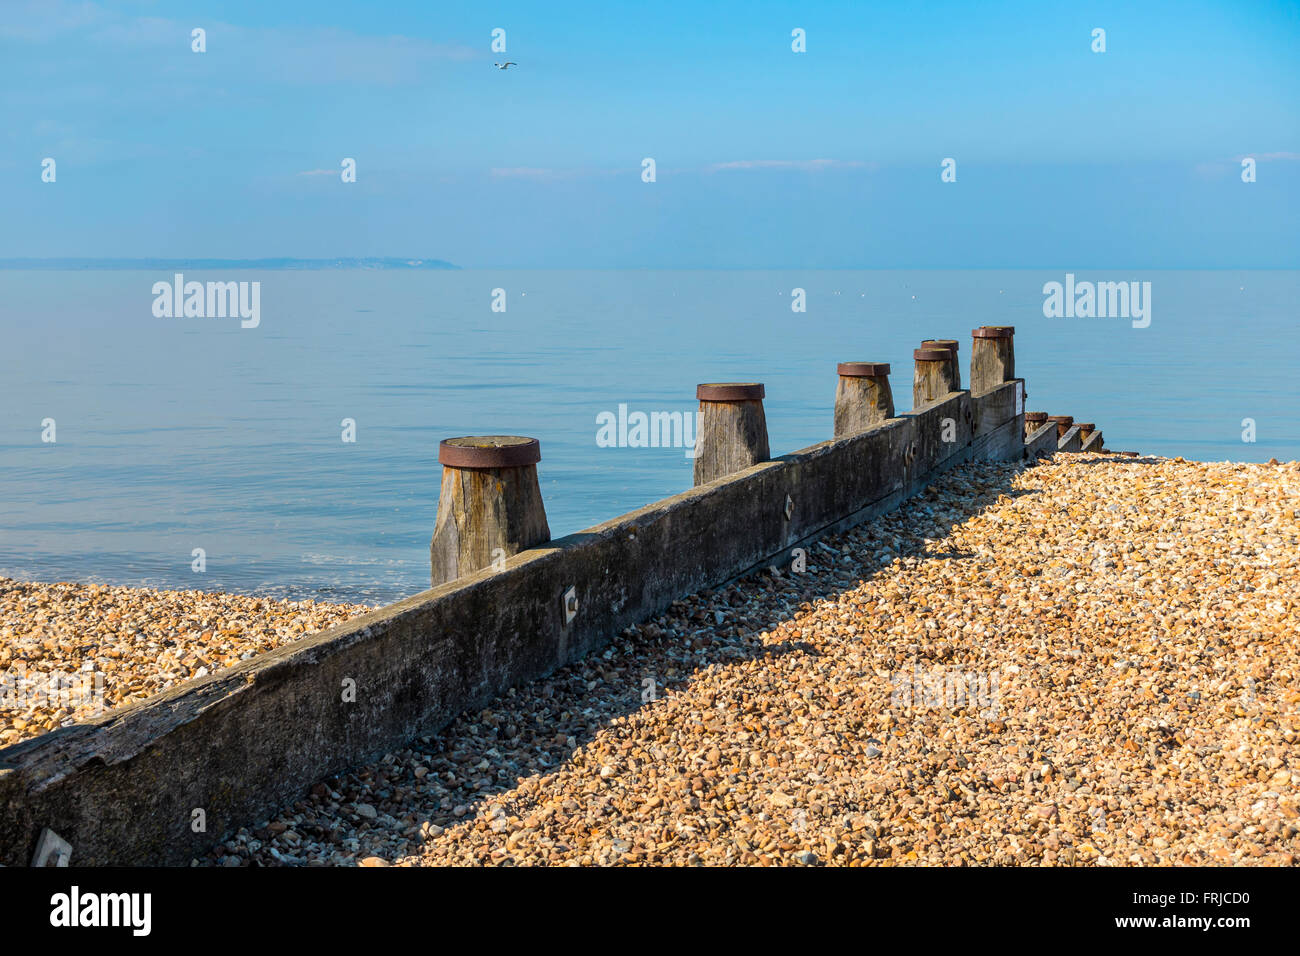 Tranquillo e pacifico mare blu spiaggia whitstable kent england Foto Stock